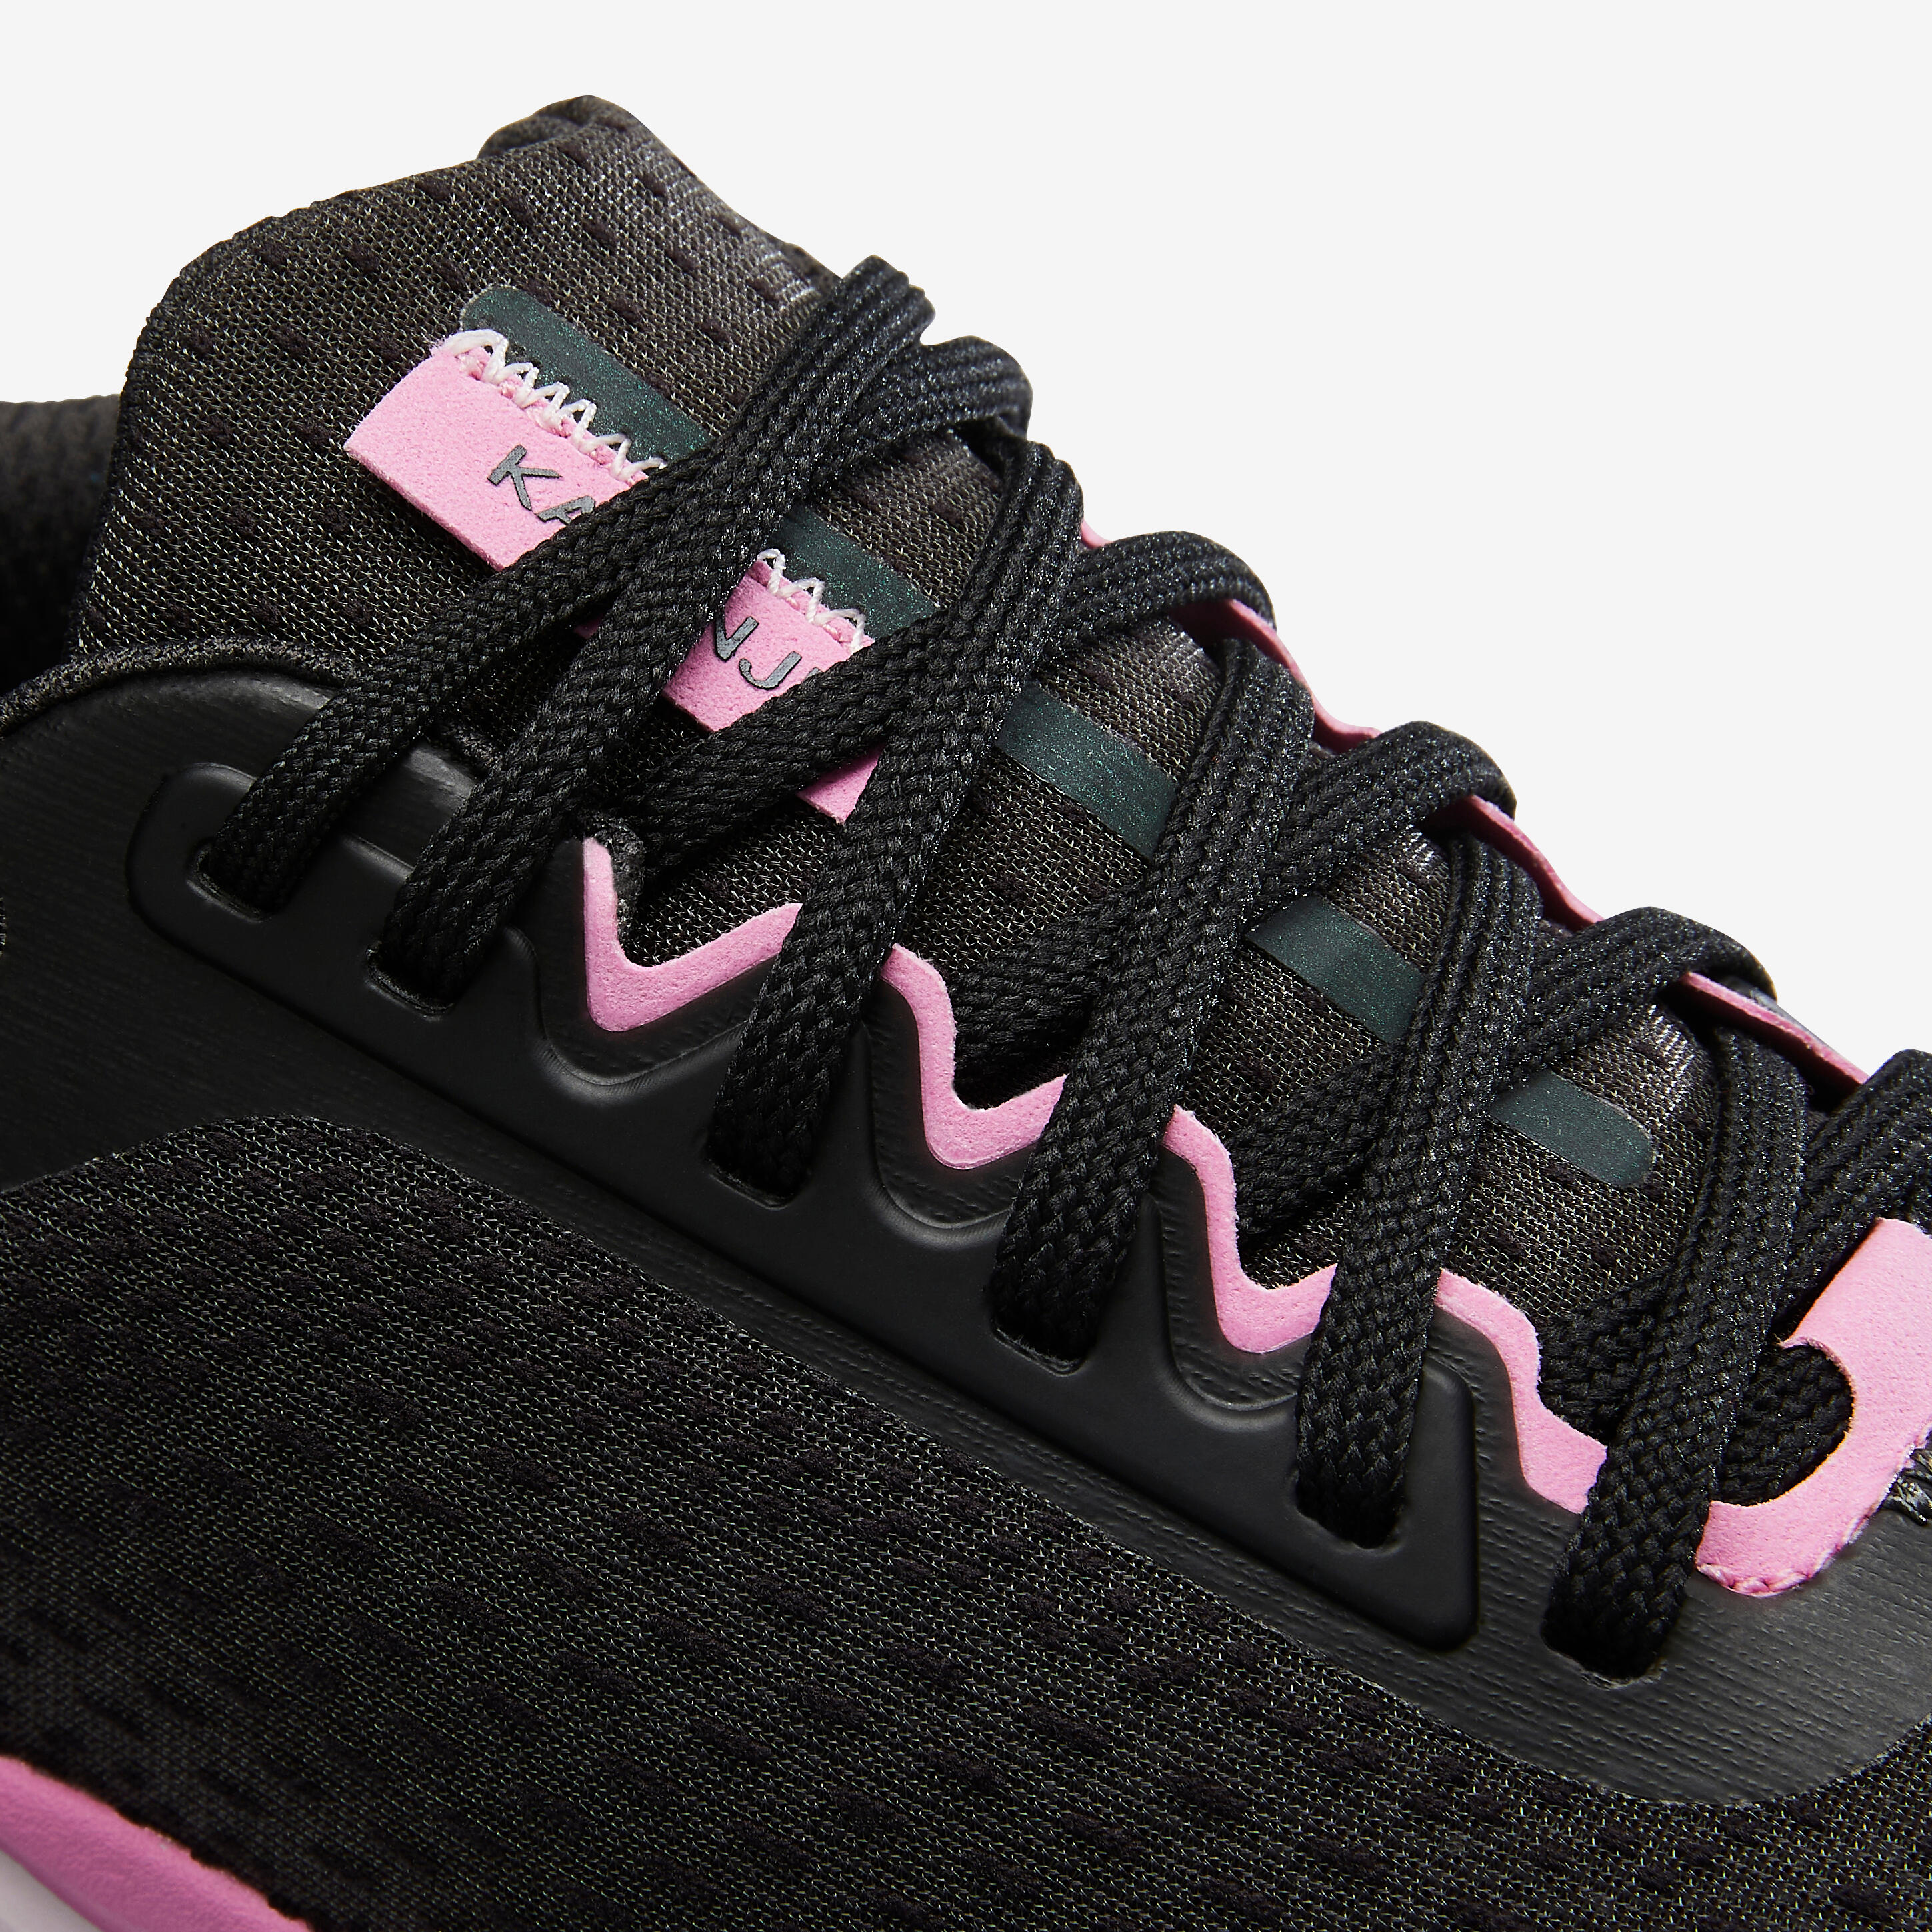 JOGFLOW 500.1 Women's Running Shoes - Dark Grey and Pink. 7/8